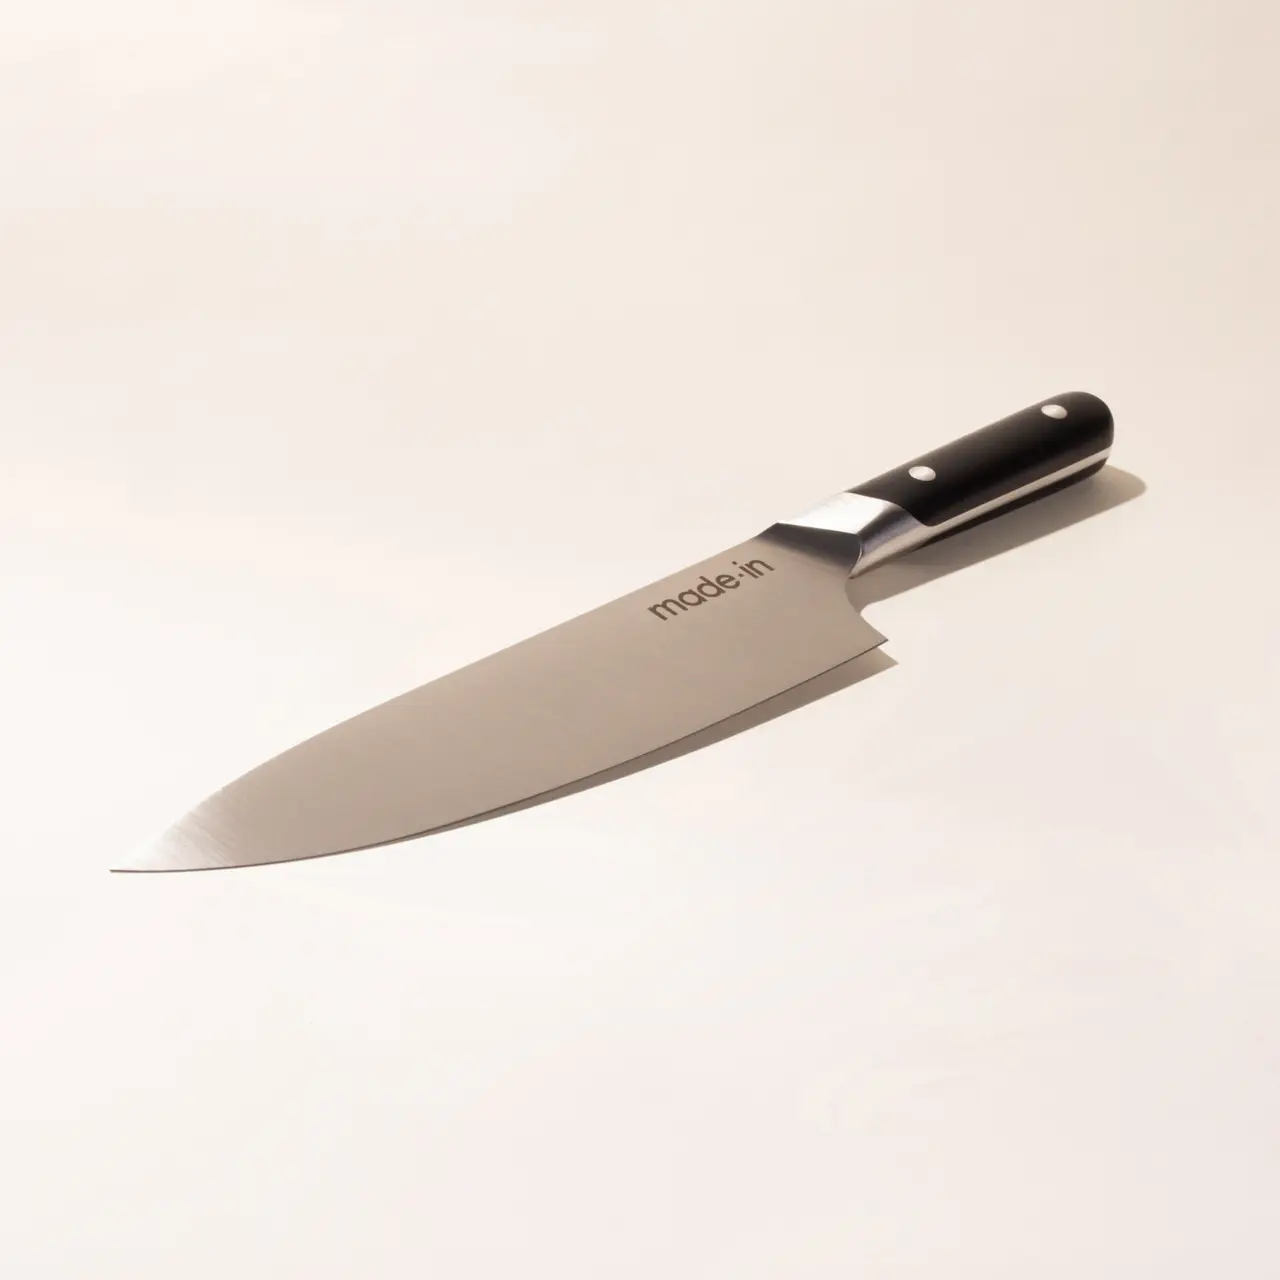 8 inch chef knife black hero